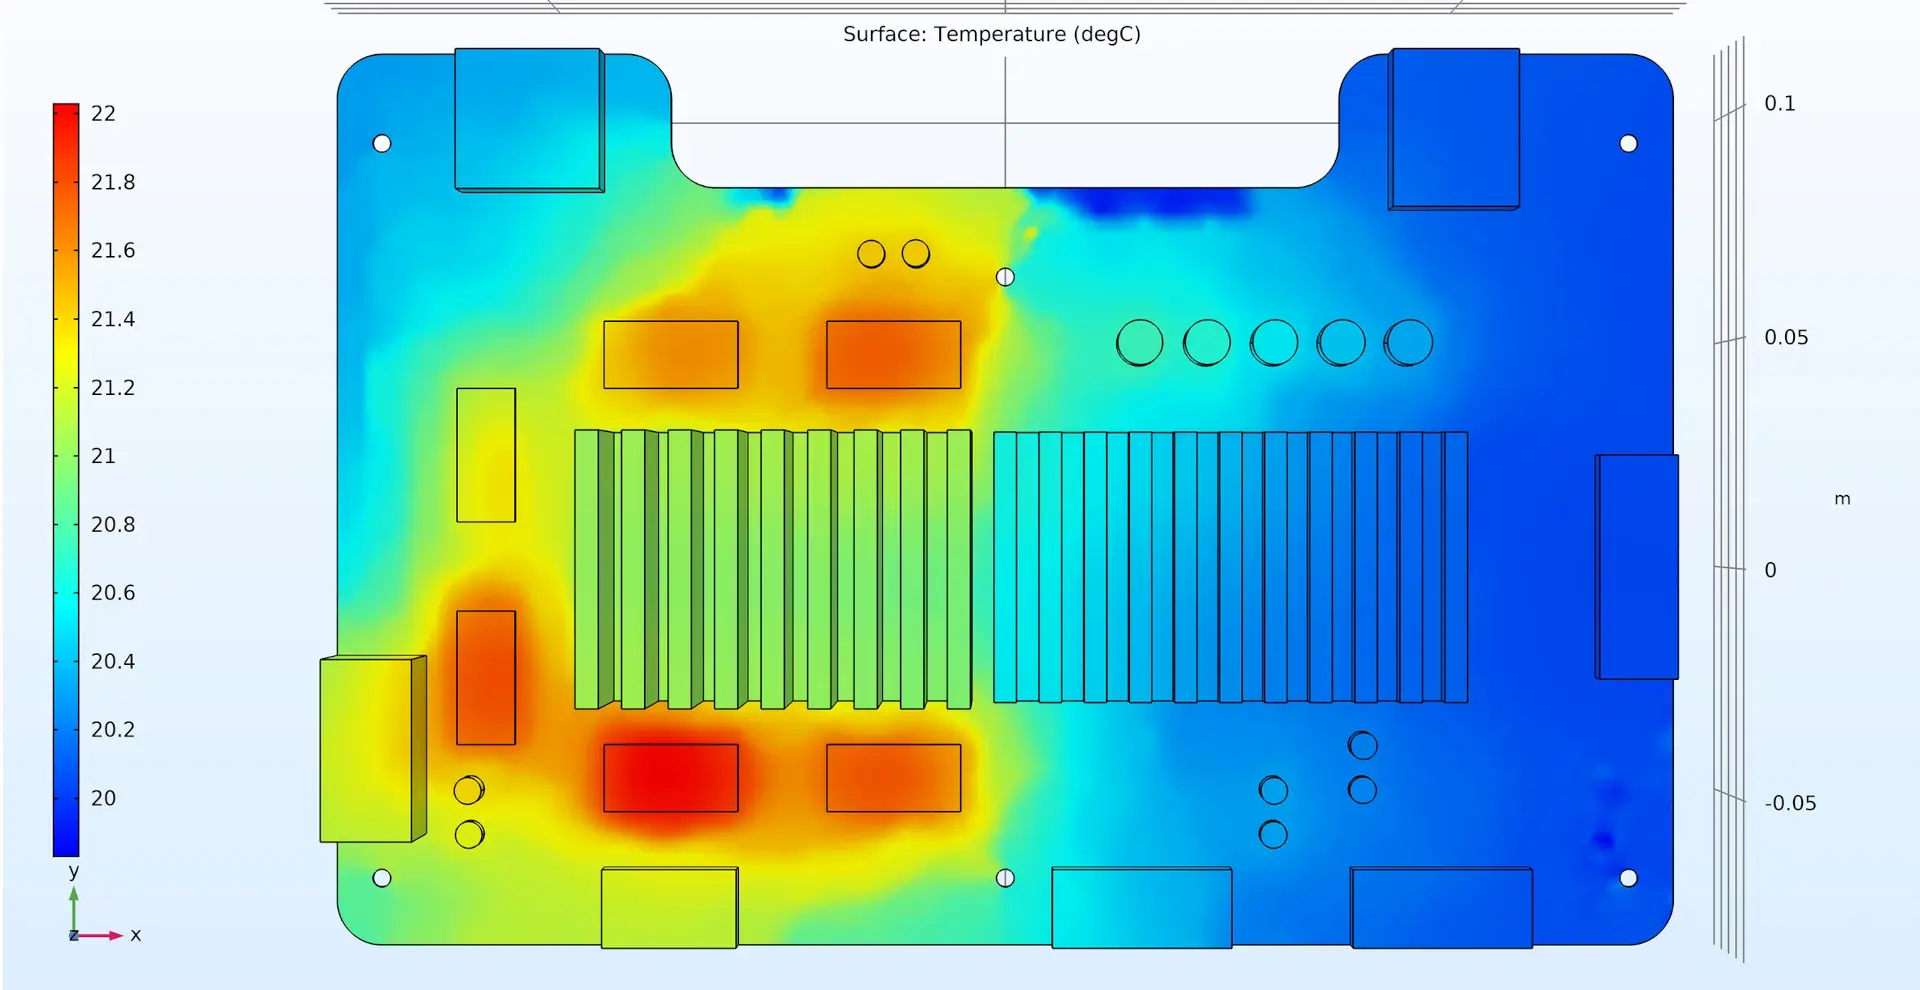 Imperative thermal analysis simulation